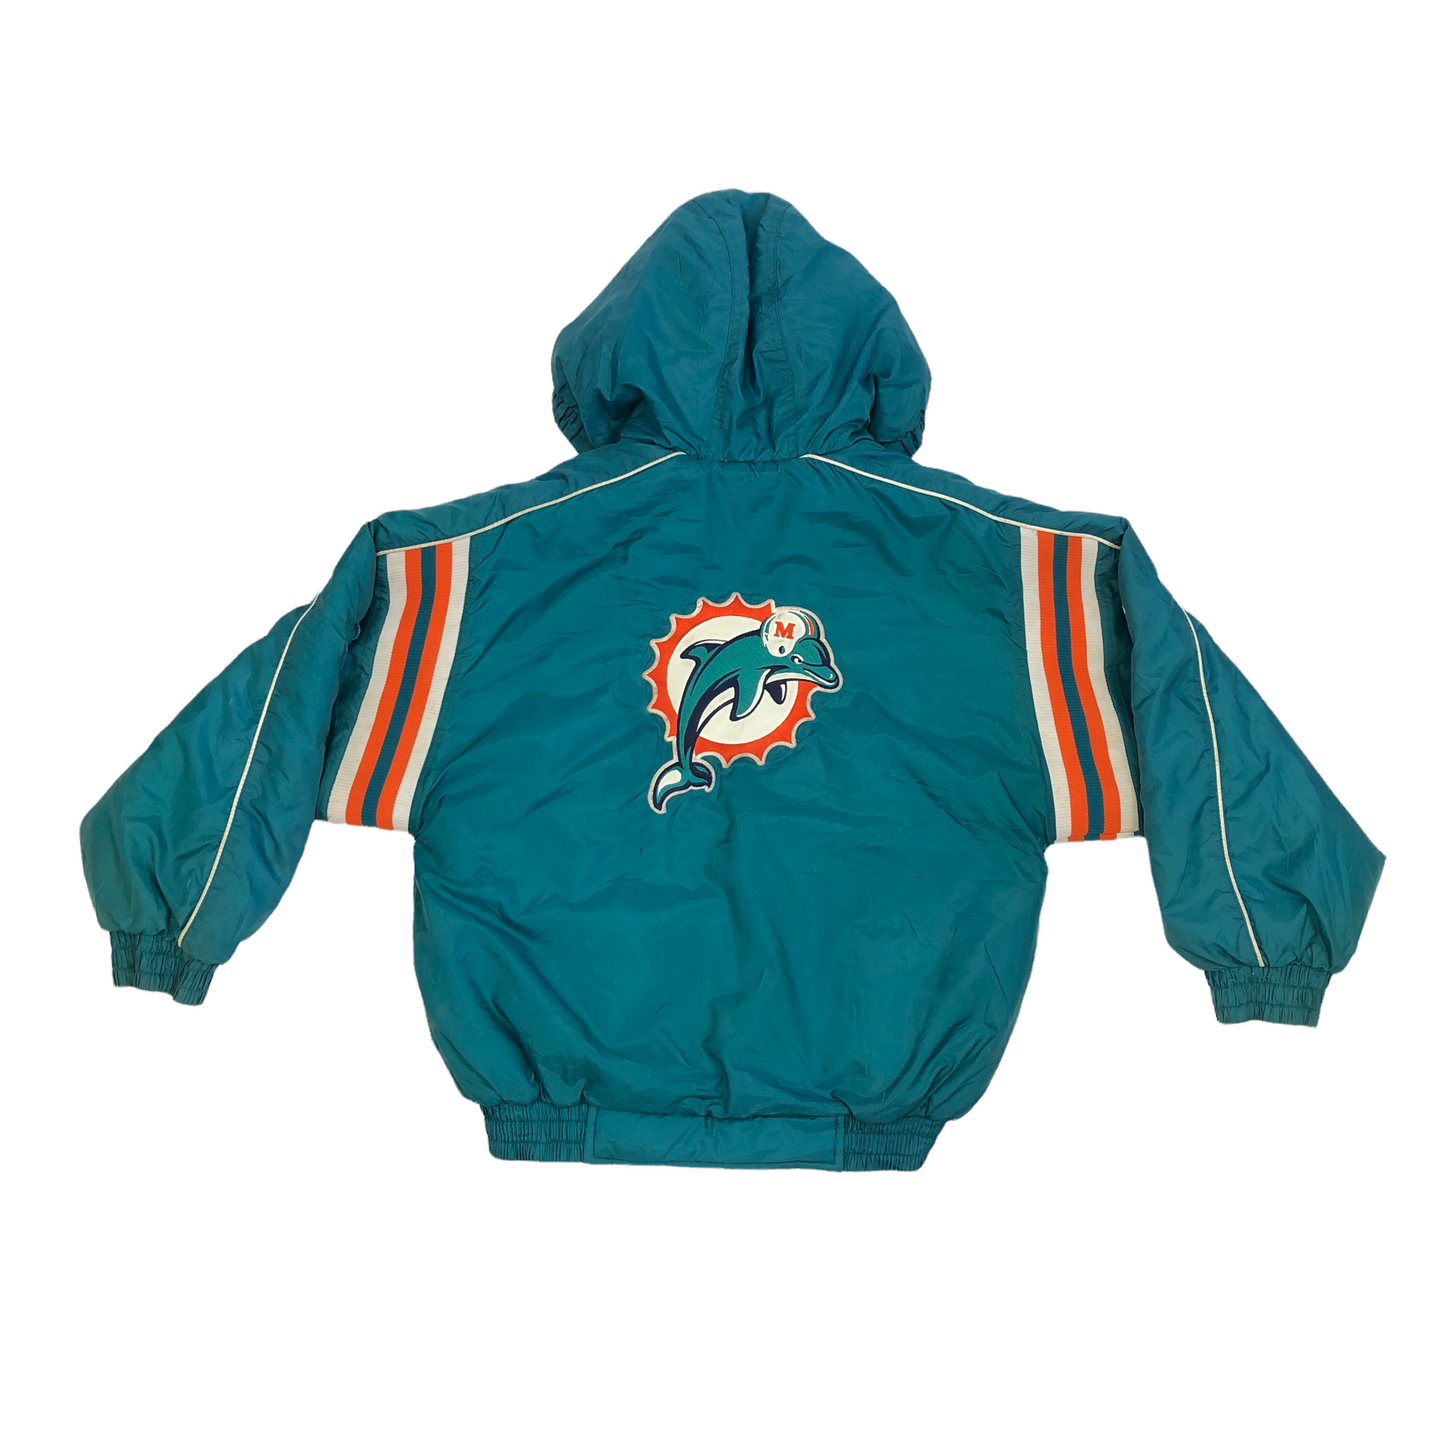 Vintage NFL Miami Dolphins Jacket (10-12yrs)